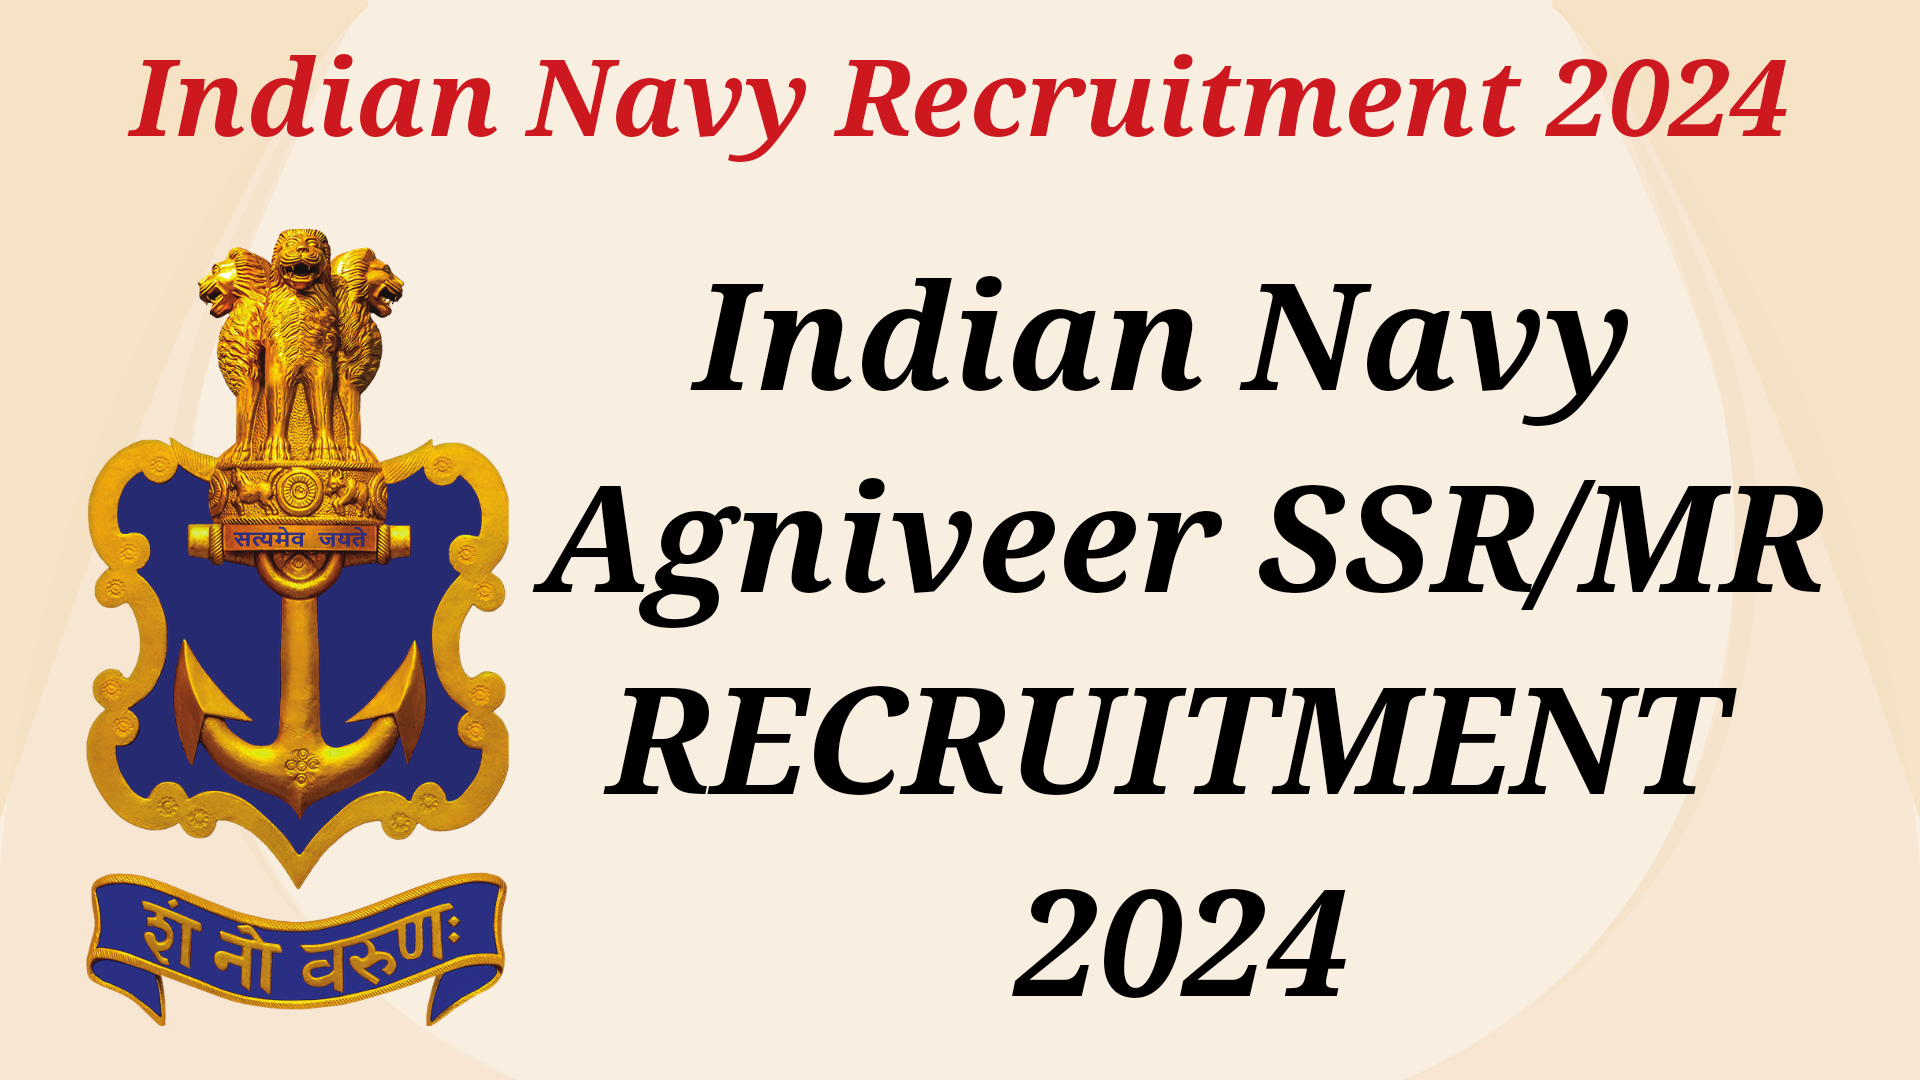 Indian Navy Agniveer SSR/MR Recruitment 2024